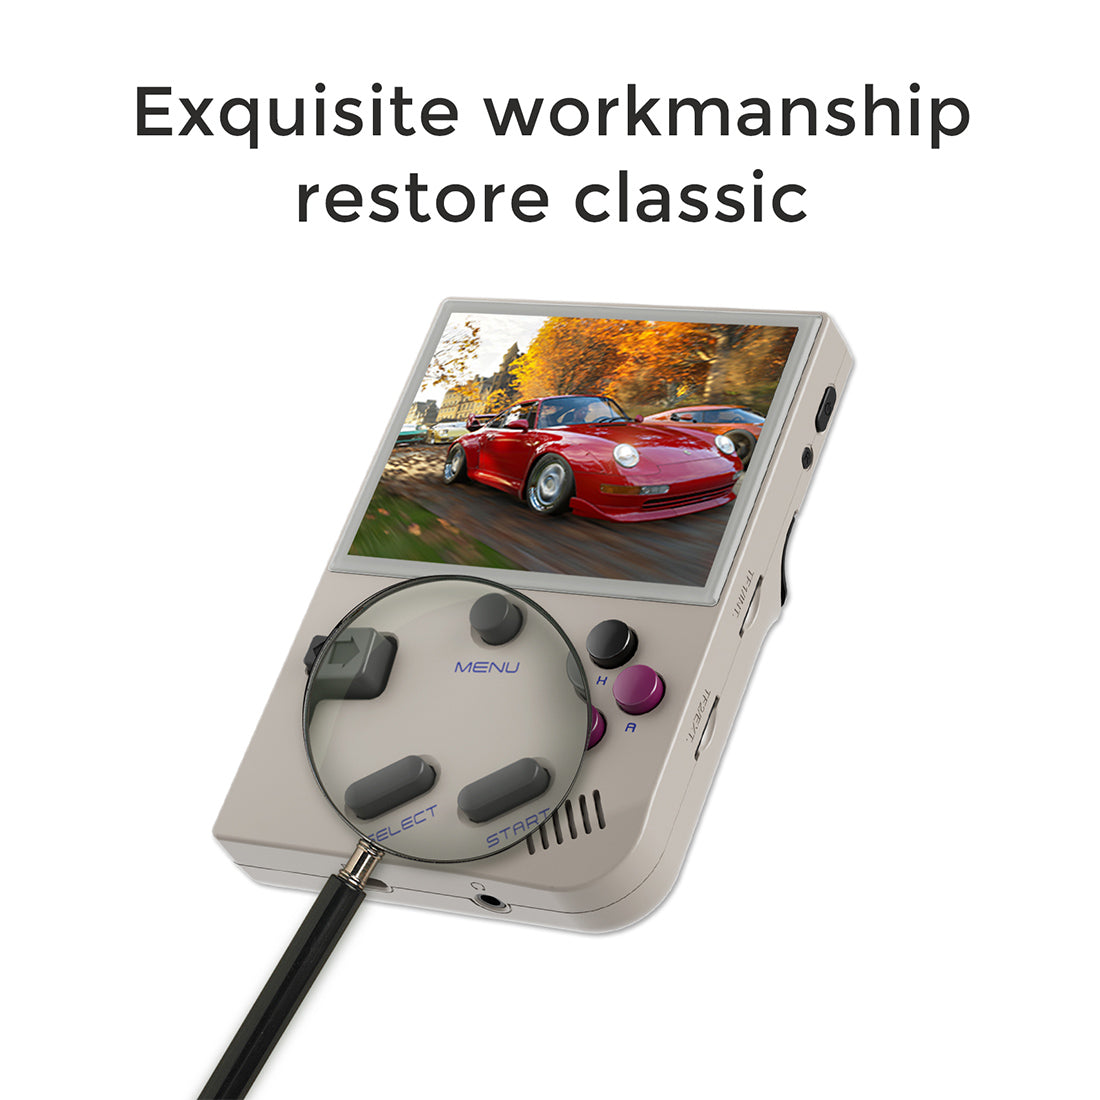 Anbernic RG35XX H Retro Portable Handheld Game Console-LITNXT – litnxt